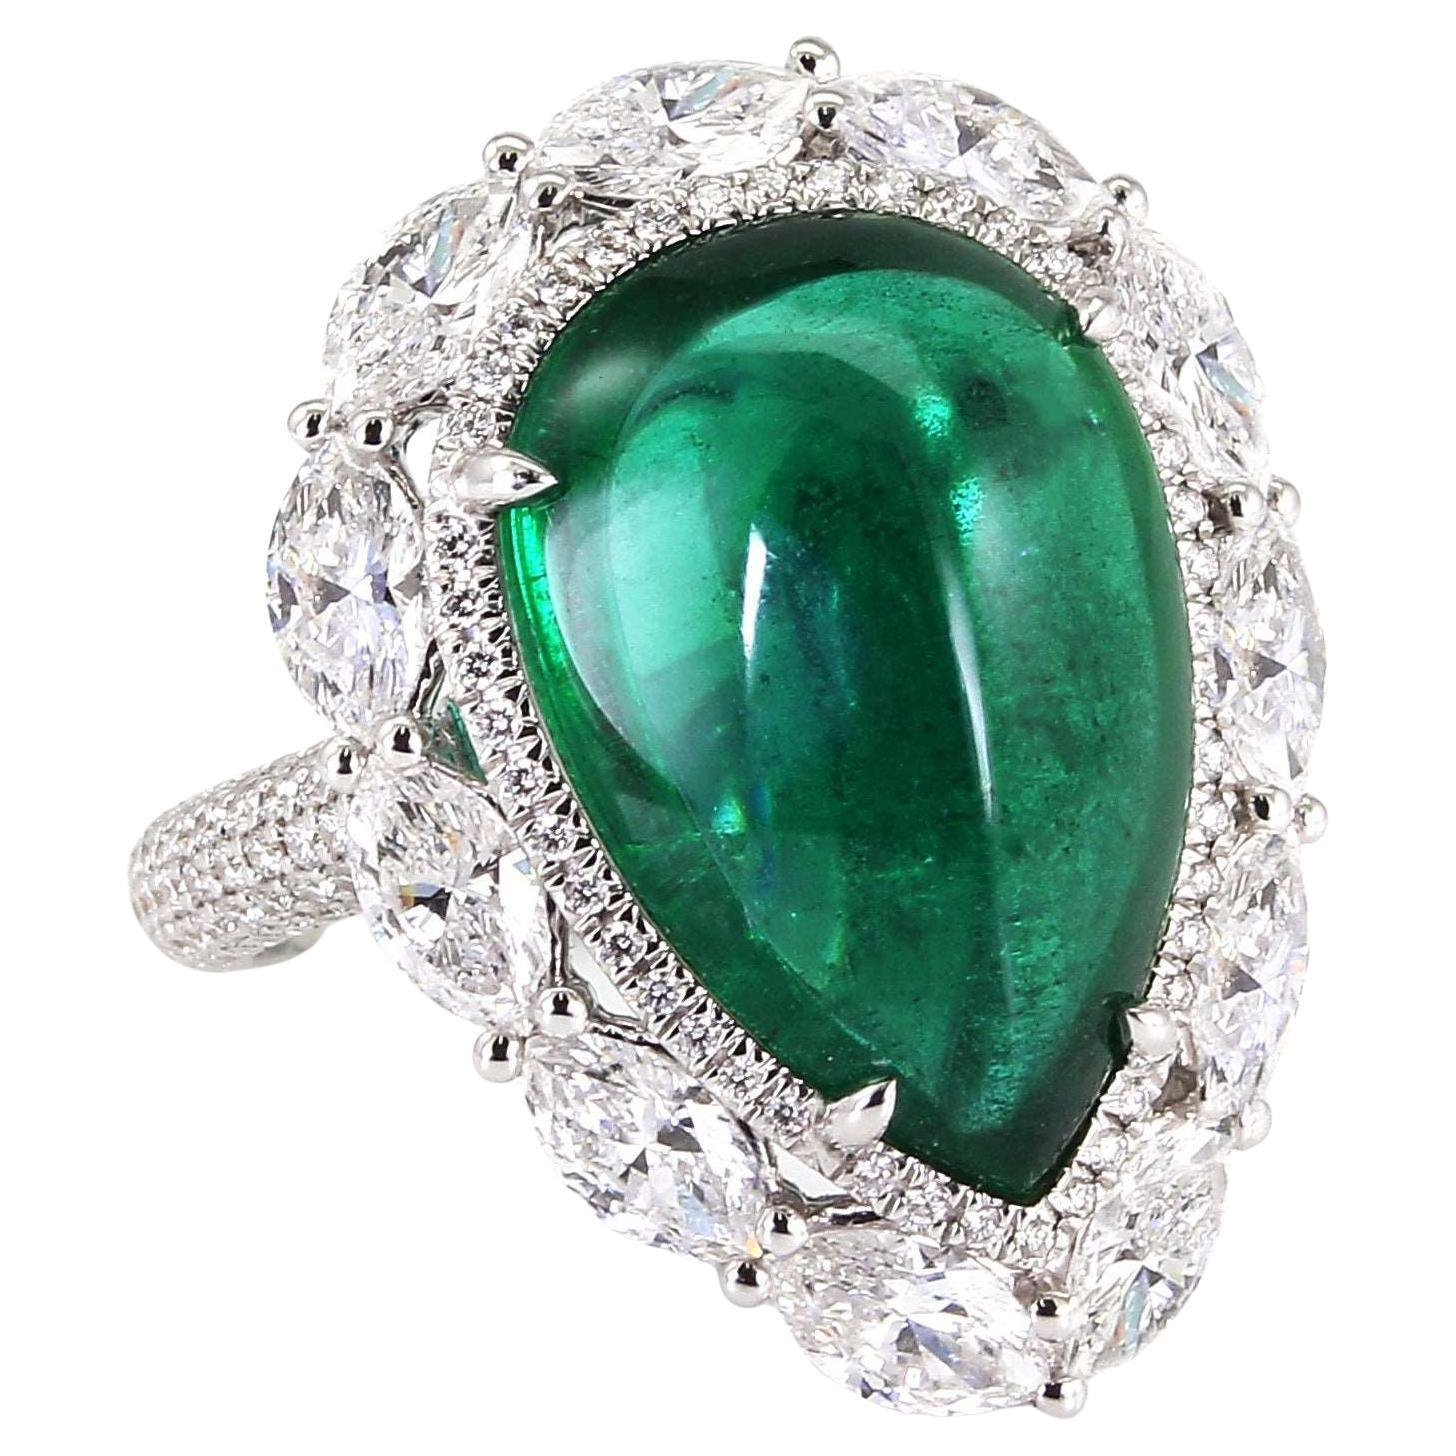 BENJAMIN FINE JEWELRY 8.44 cts Emerald with Diamond 18K Ring